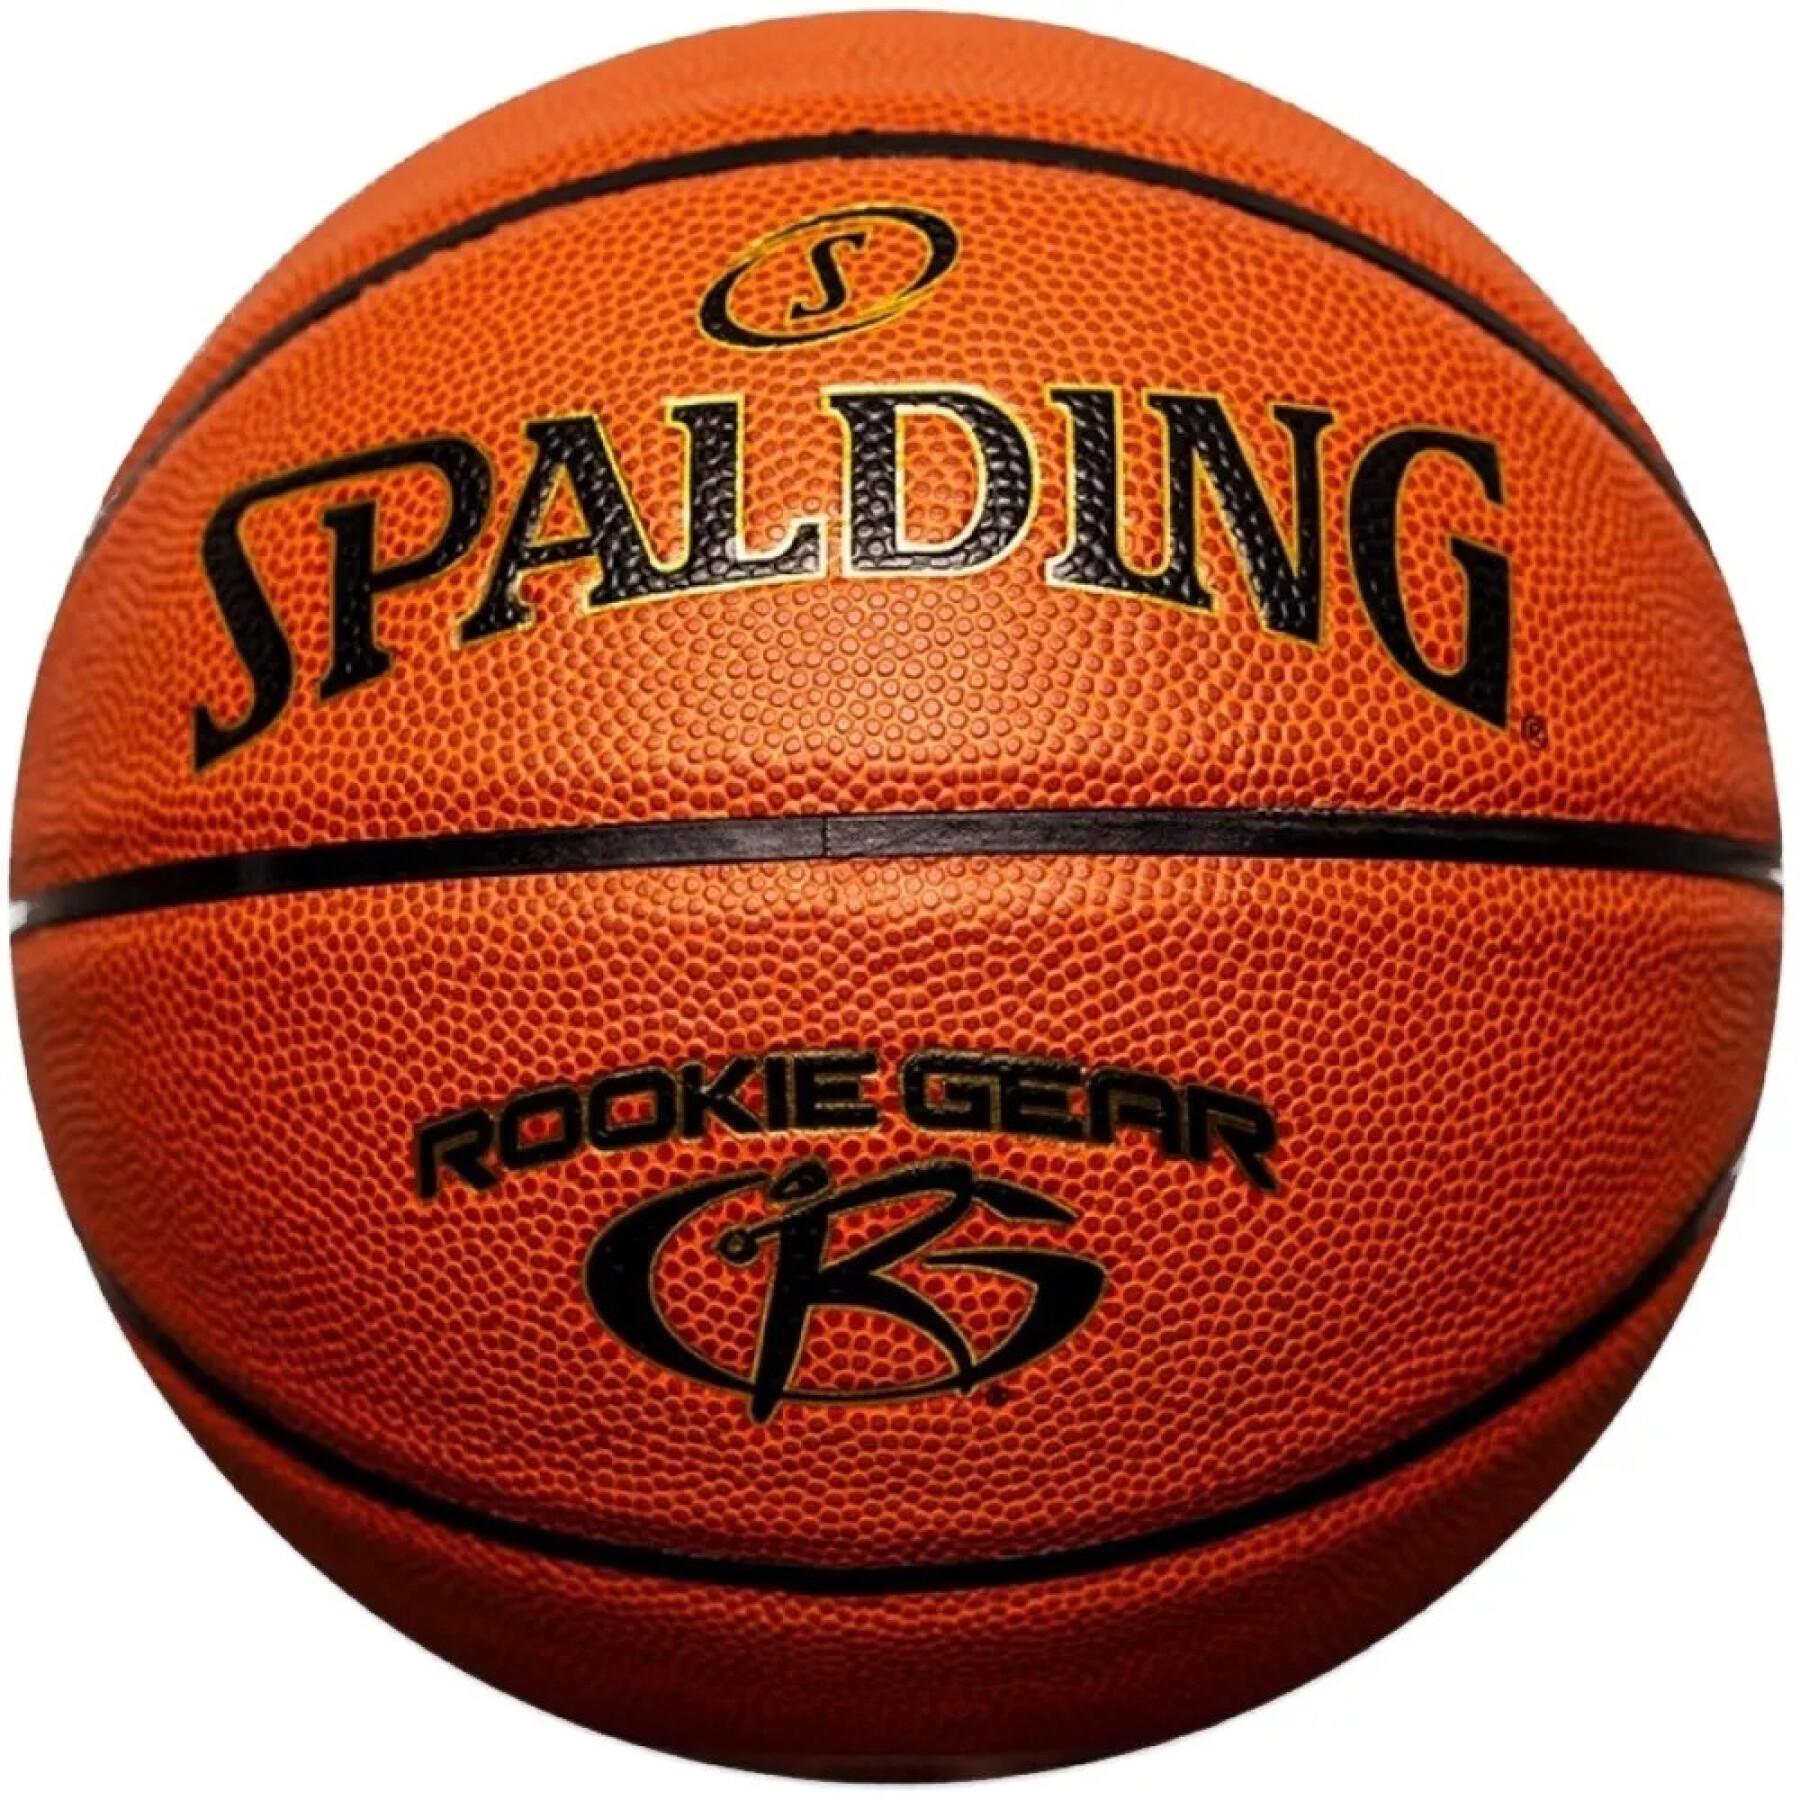 Ballon Spalding Rookie Gear Composite